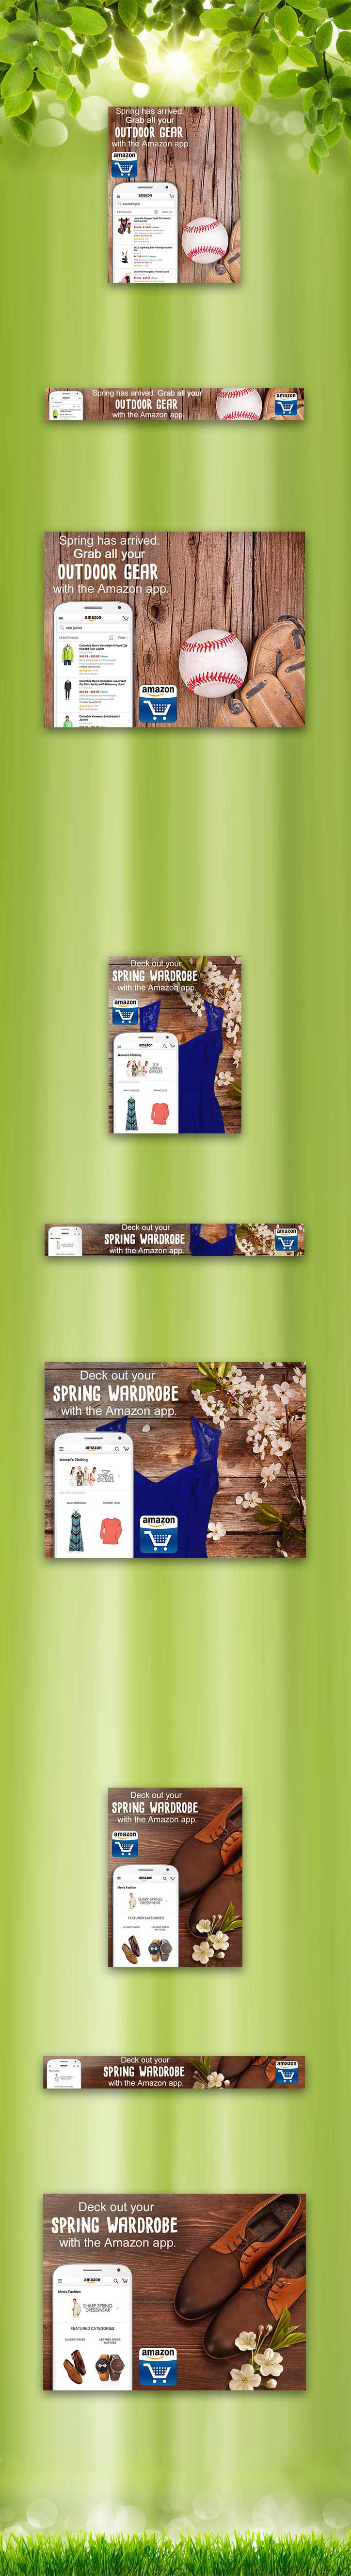 Amazon mobile app spring green Shopping ad banner design